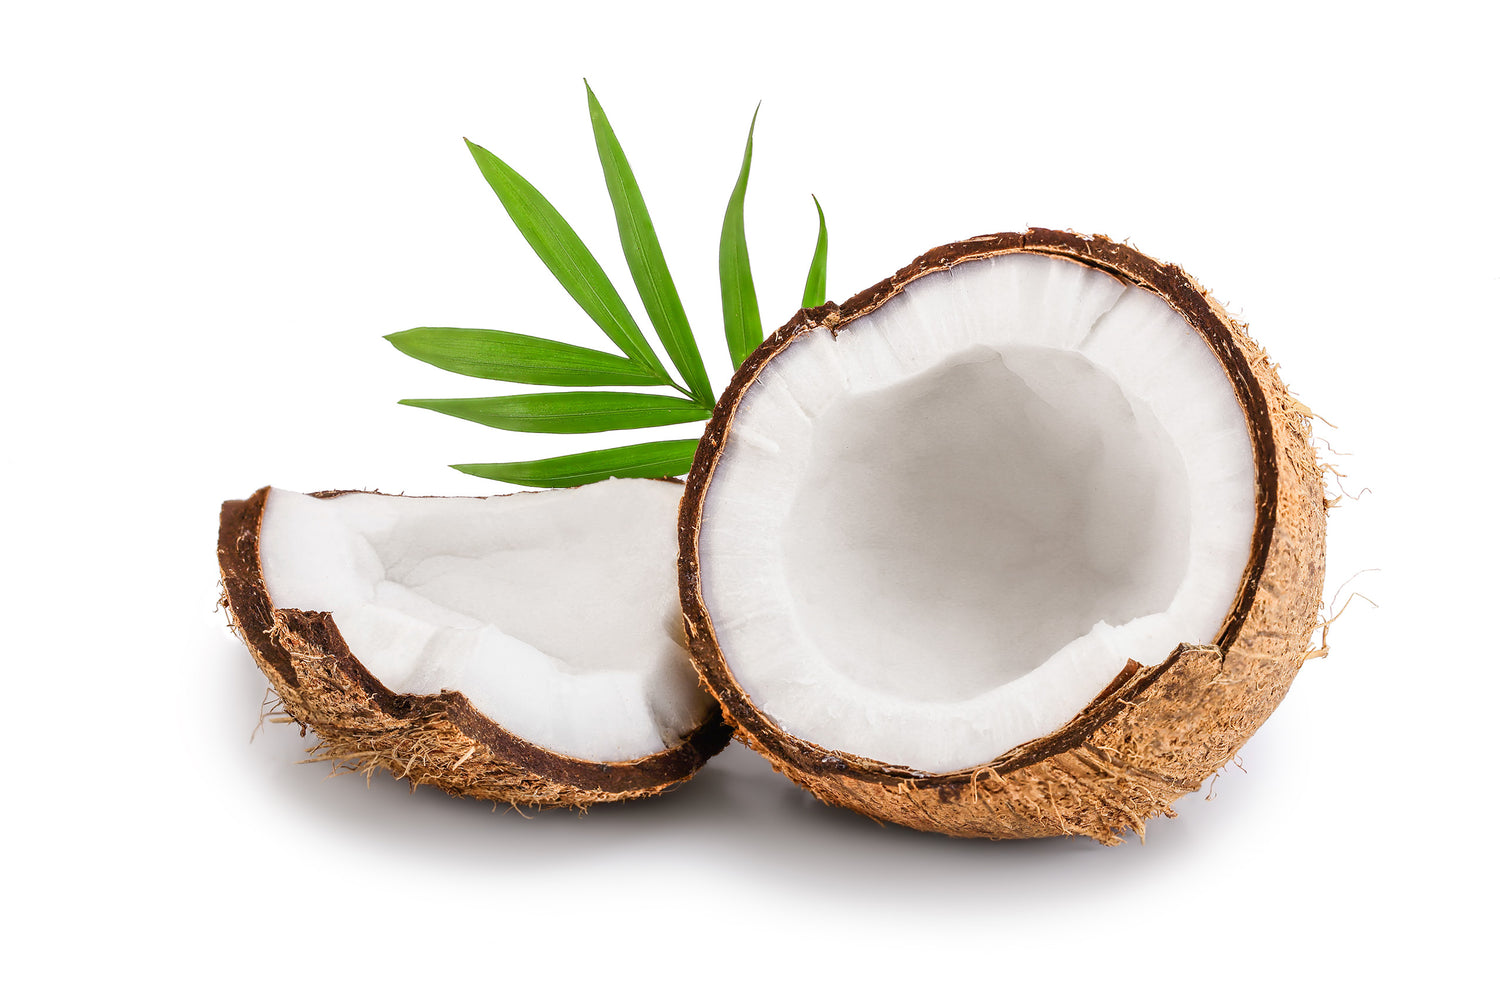 eine offene Kokosnuss | an open coconut